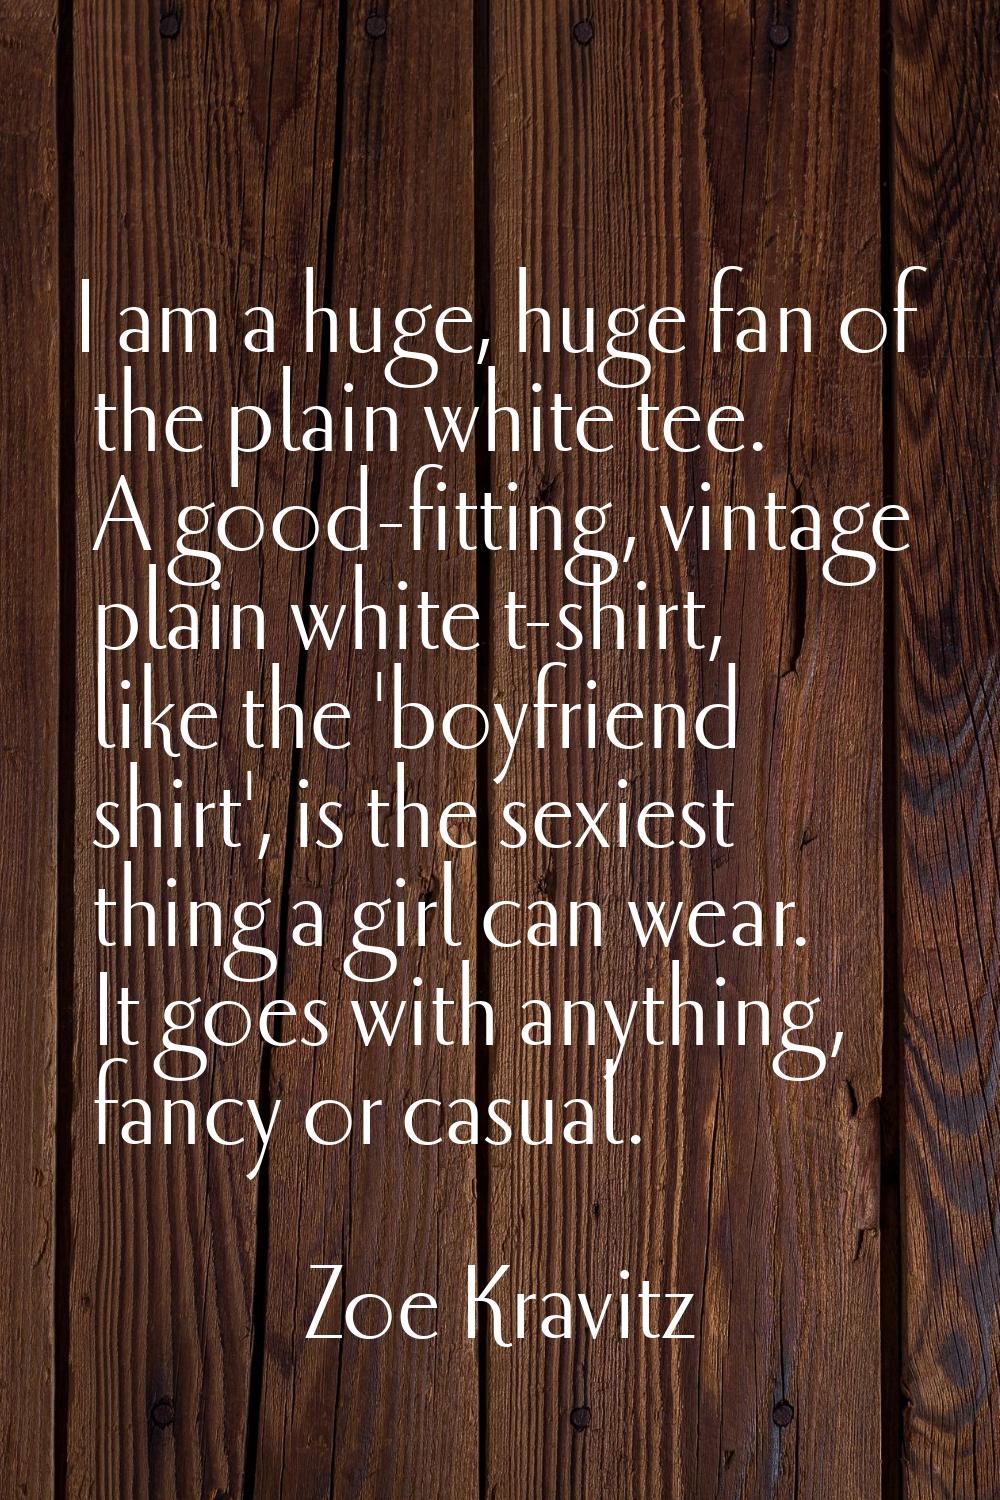 I am a huge, huge fan of the plain white tee. A good-fitting, vintage plain white t-shirt, like the